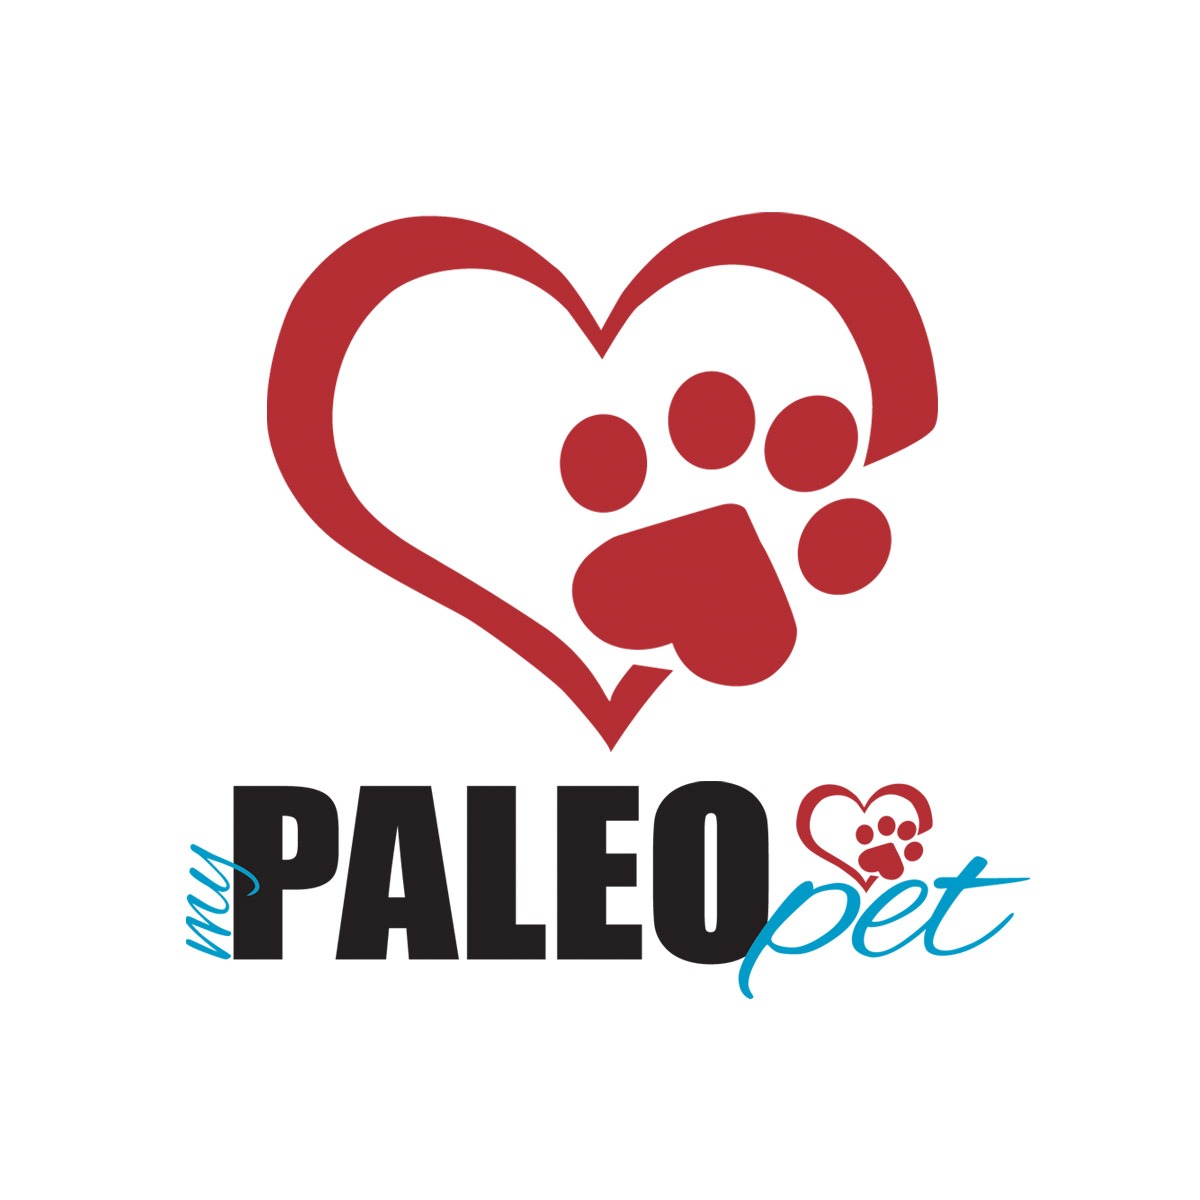 My Paleo Pet